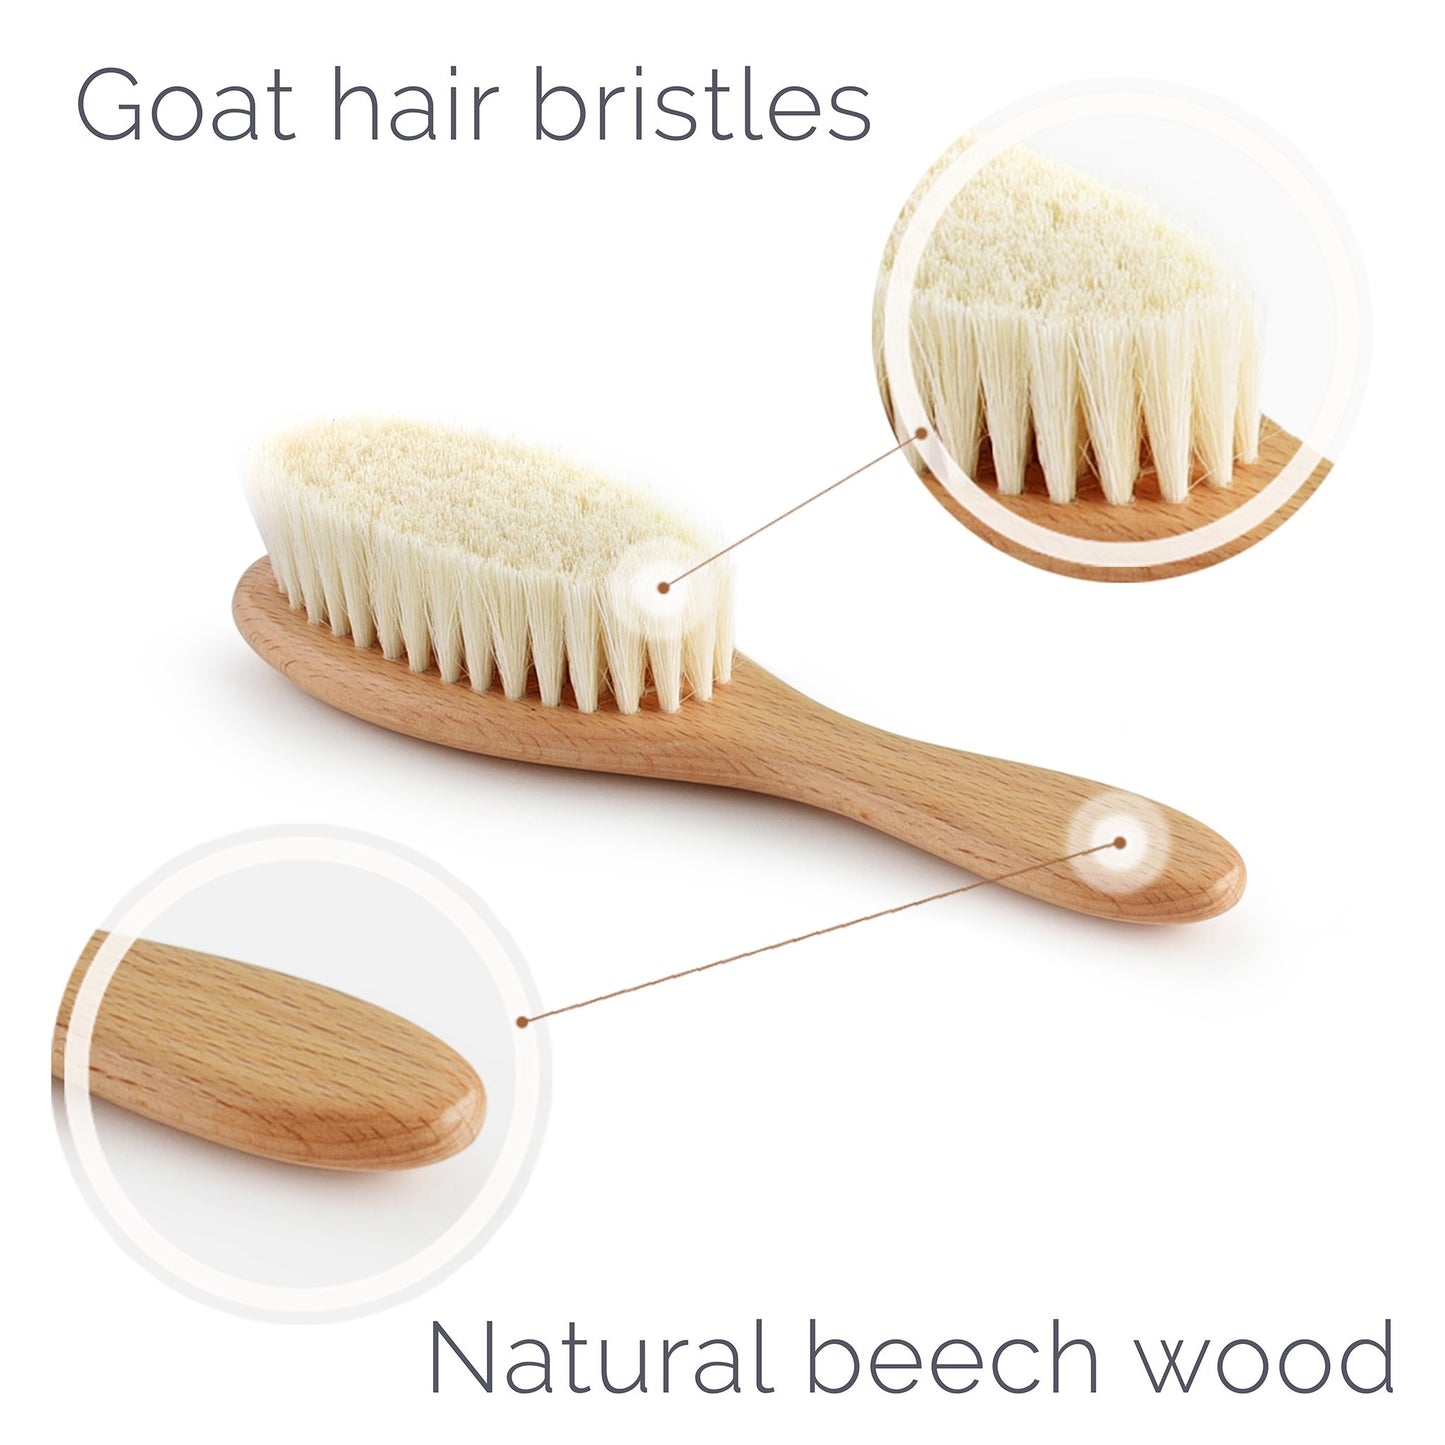 wooden baby hair brush with goat hair bristles